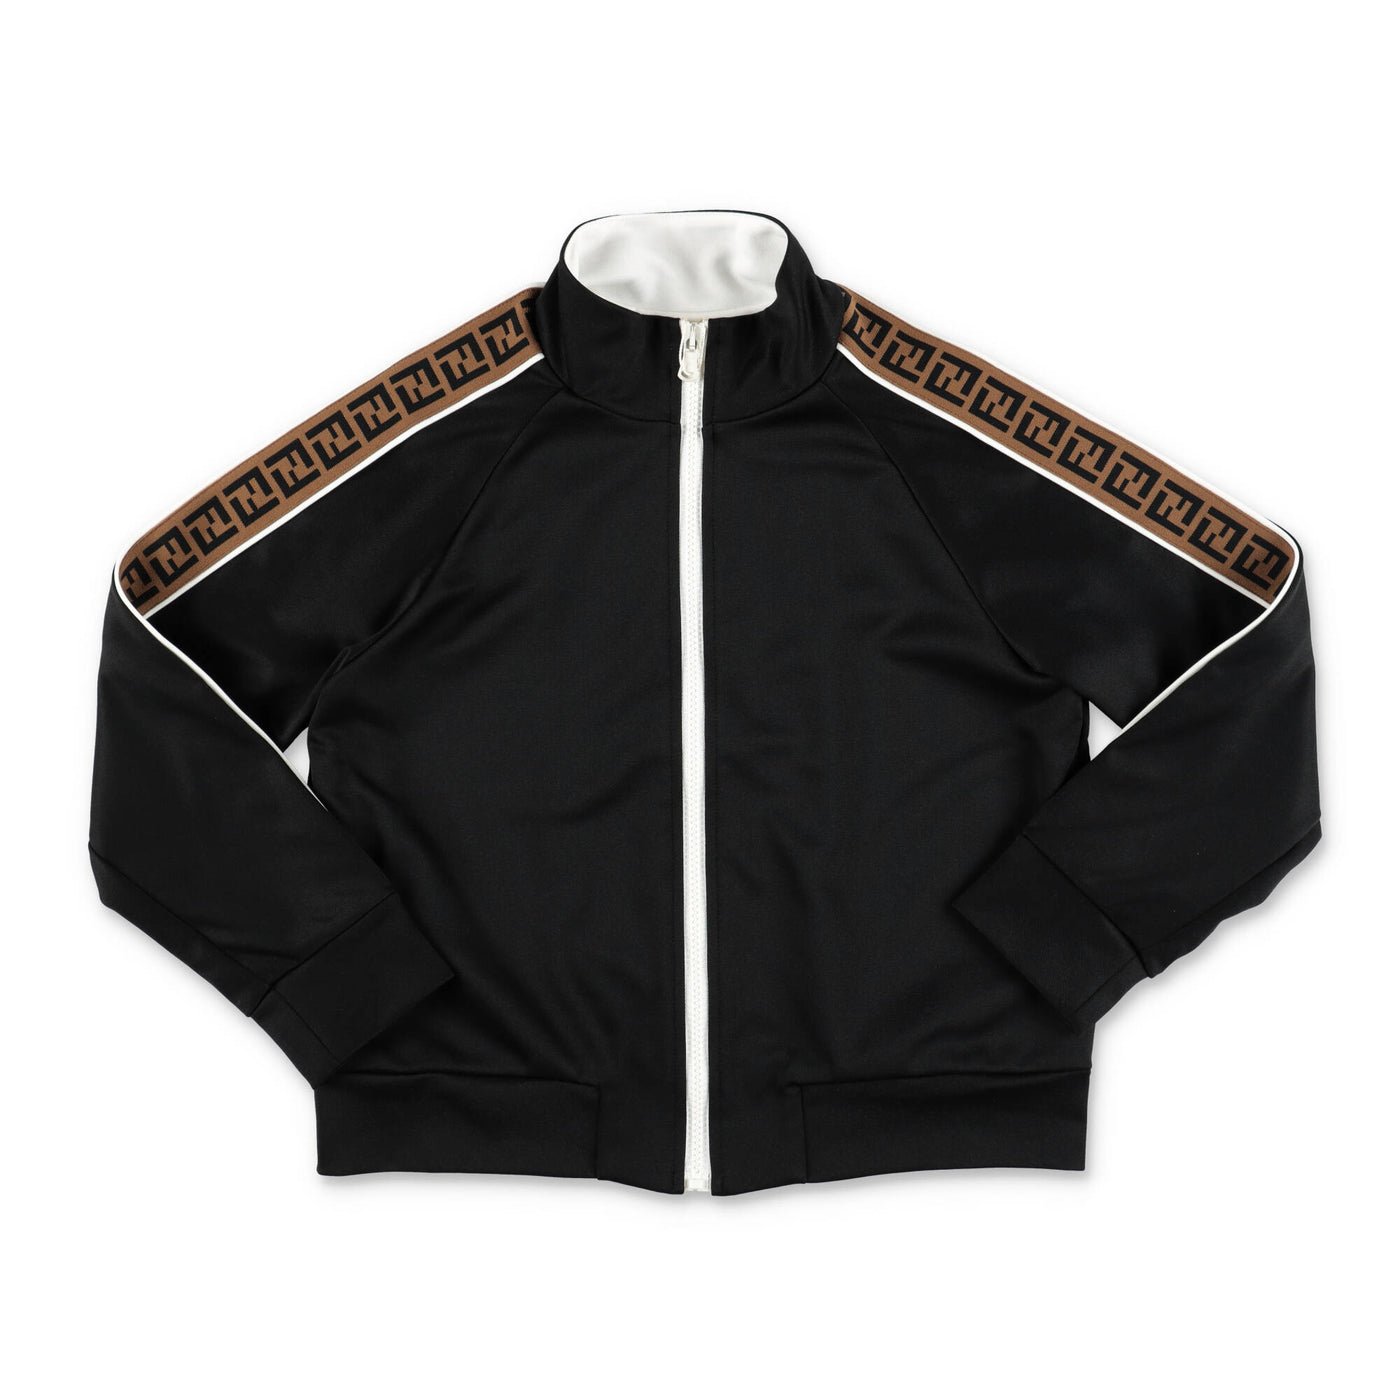 Black cotton blend boy FENDI sweatshirt | Carofiglio Junior